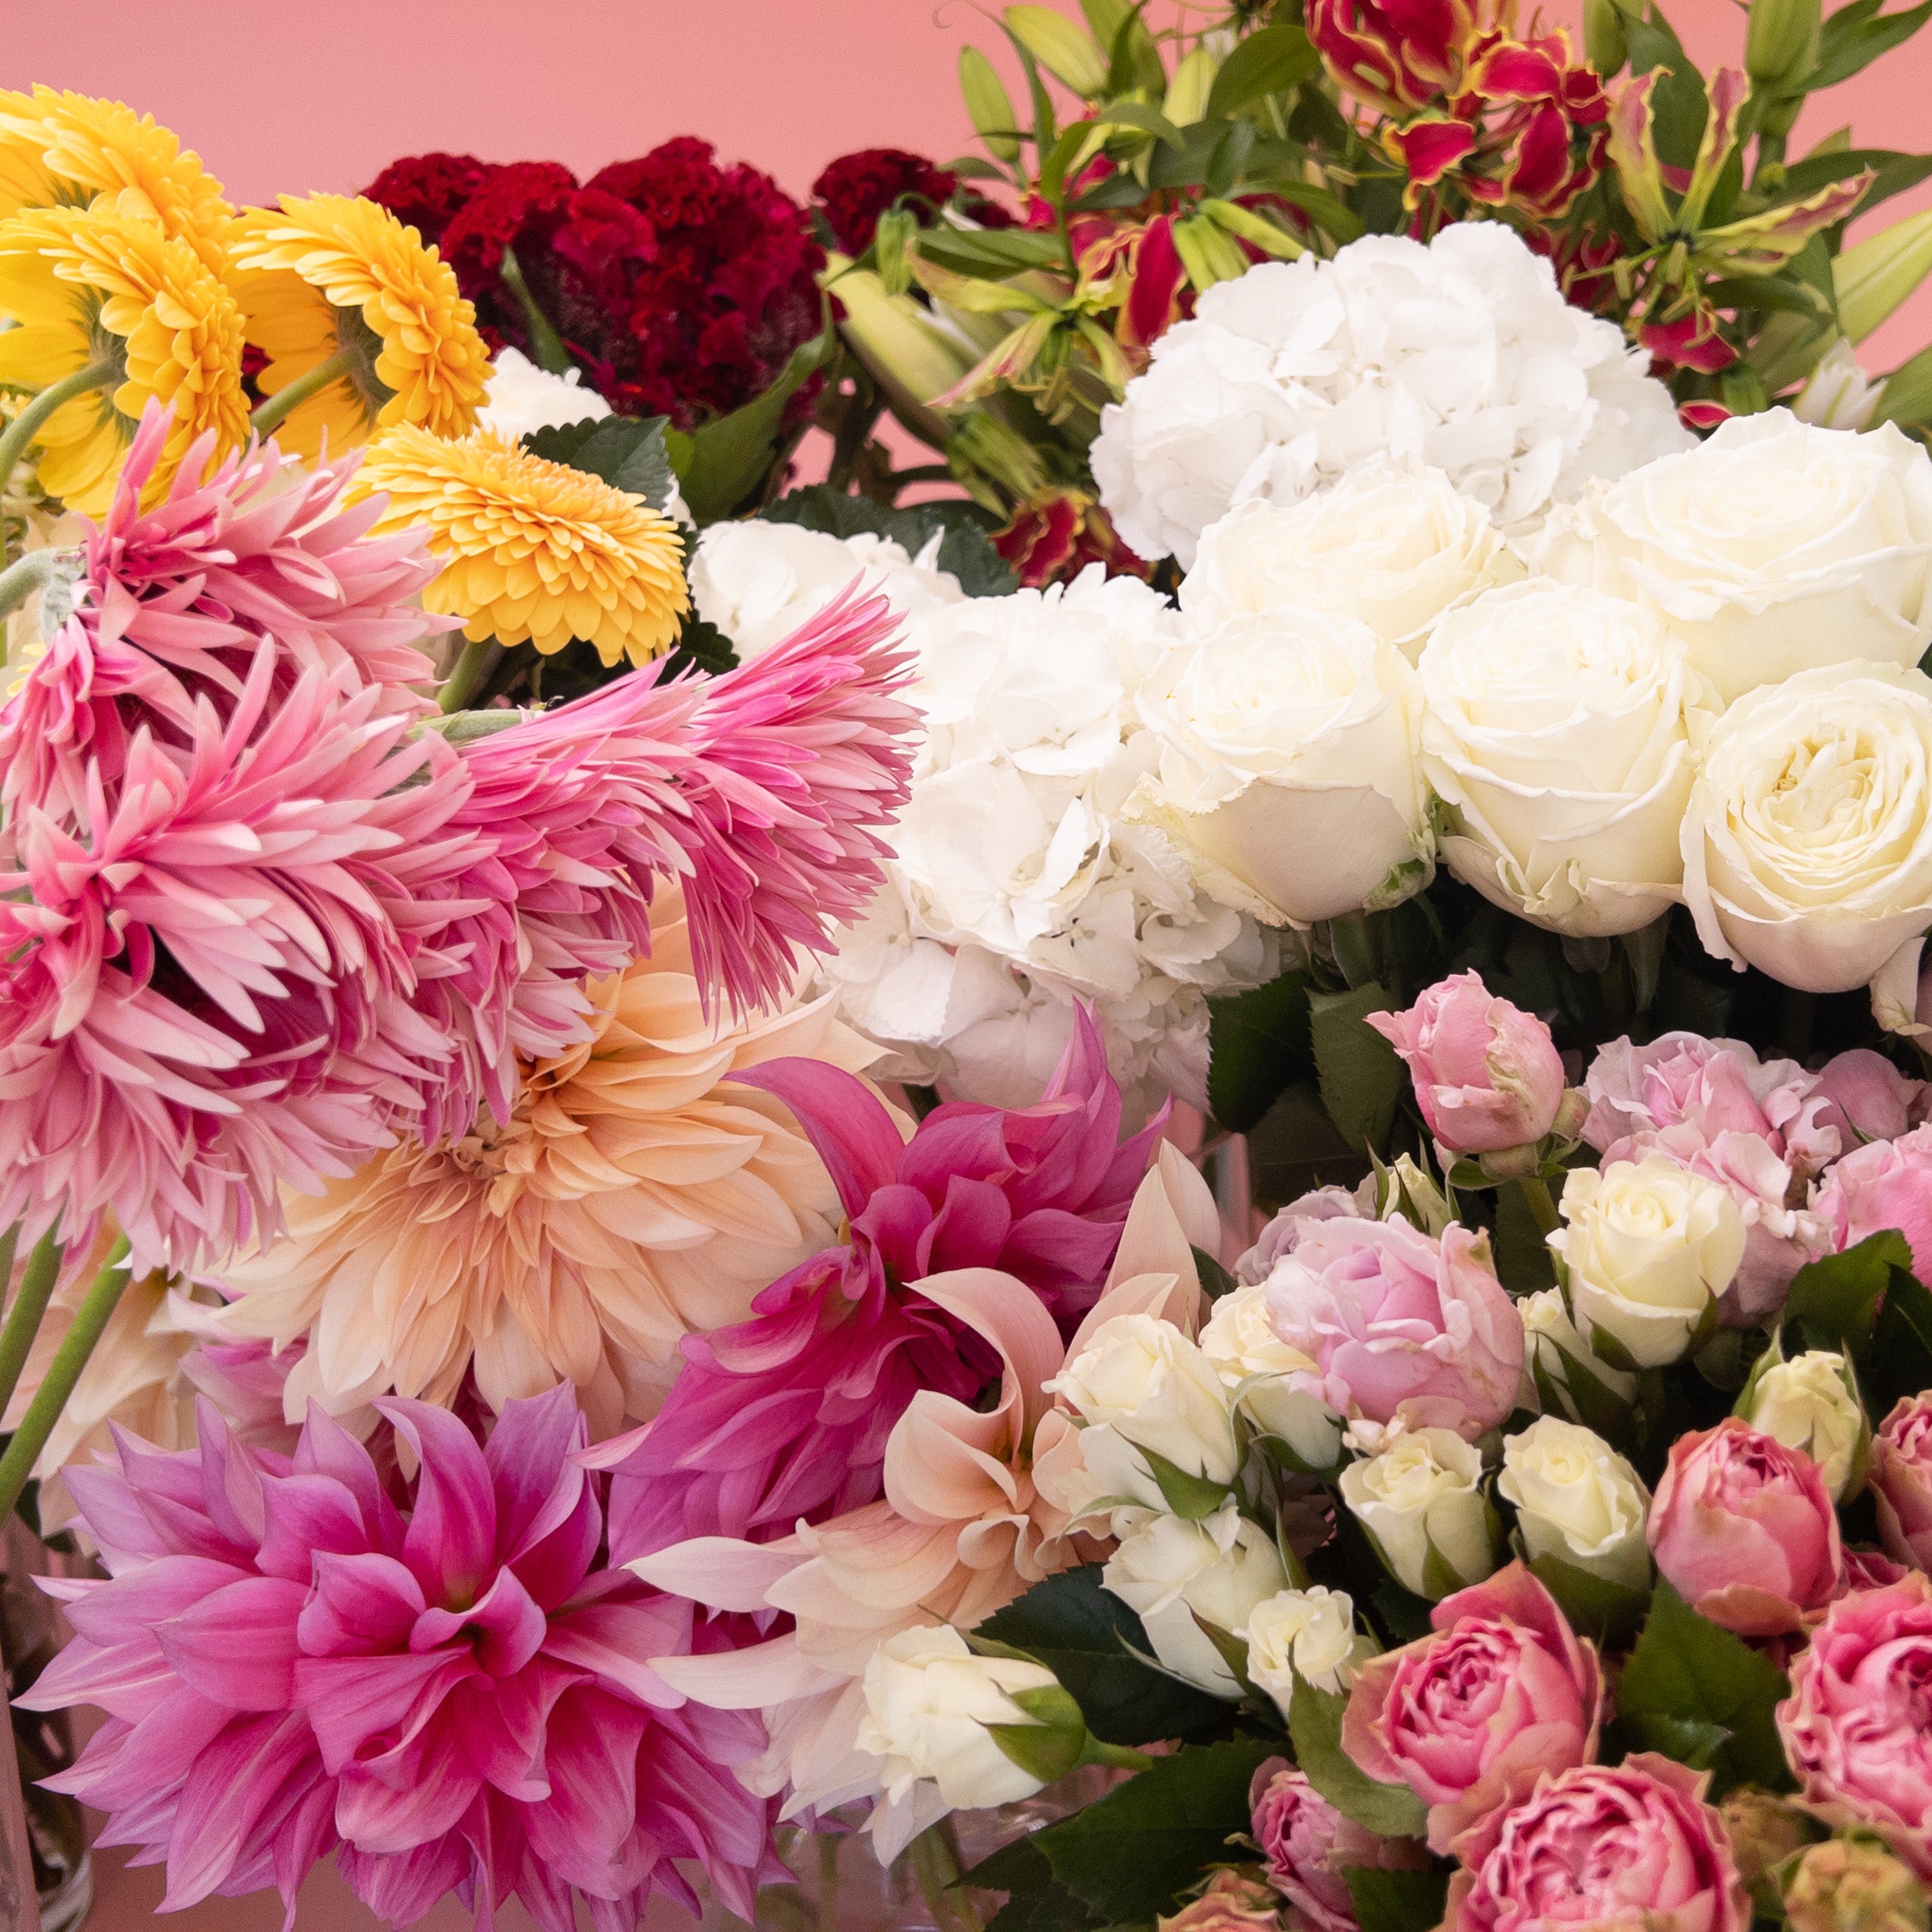 Florist Choice… trust us!